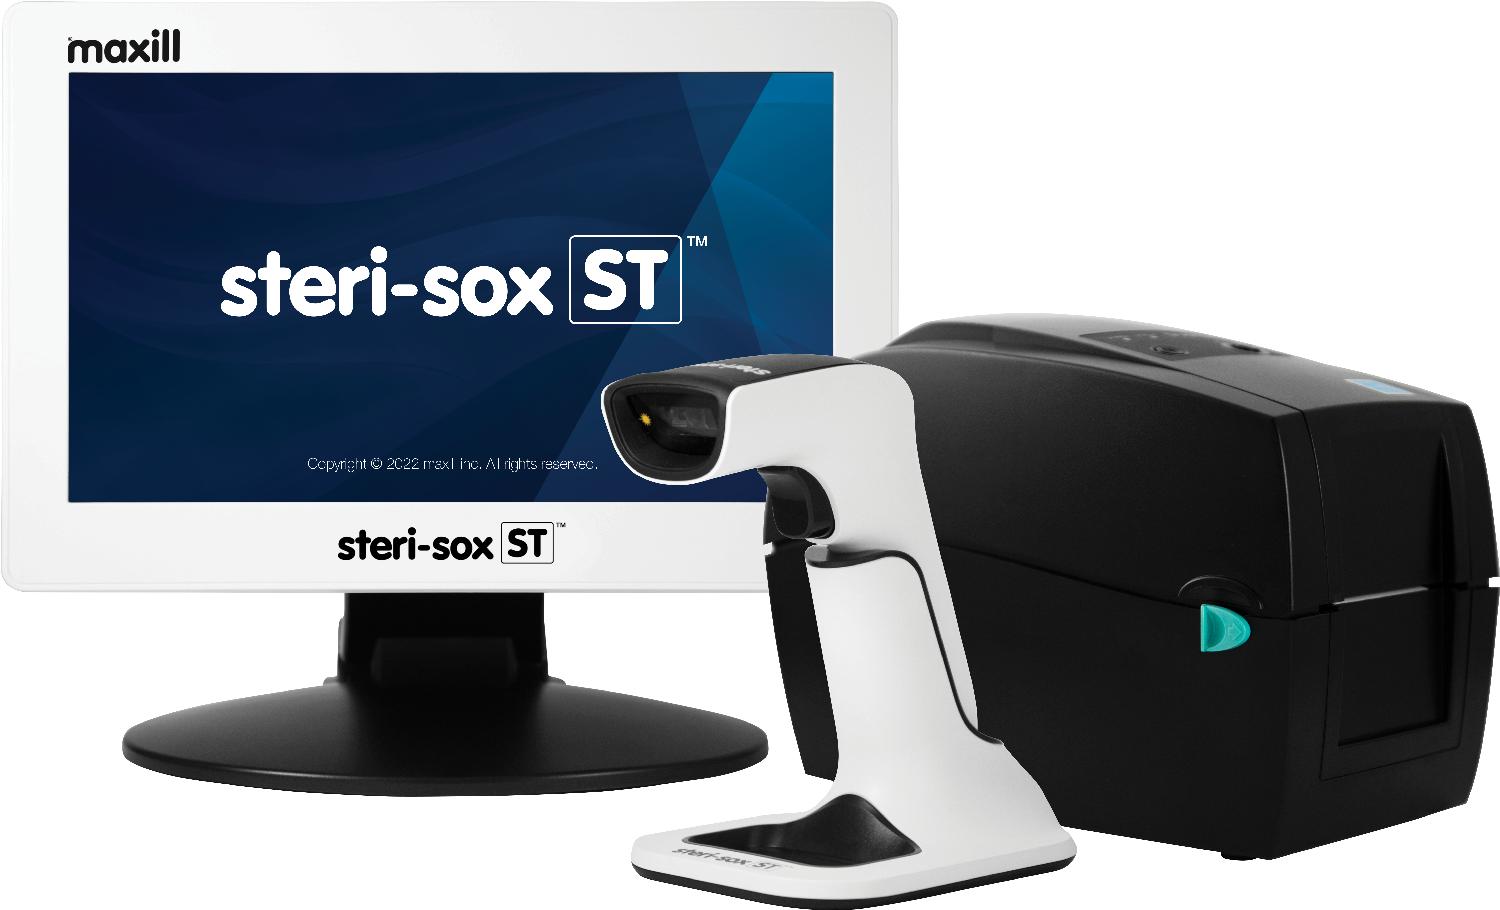 steri-sox ST Kiosk, Printer and Scan Gun